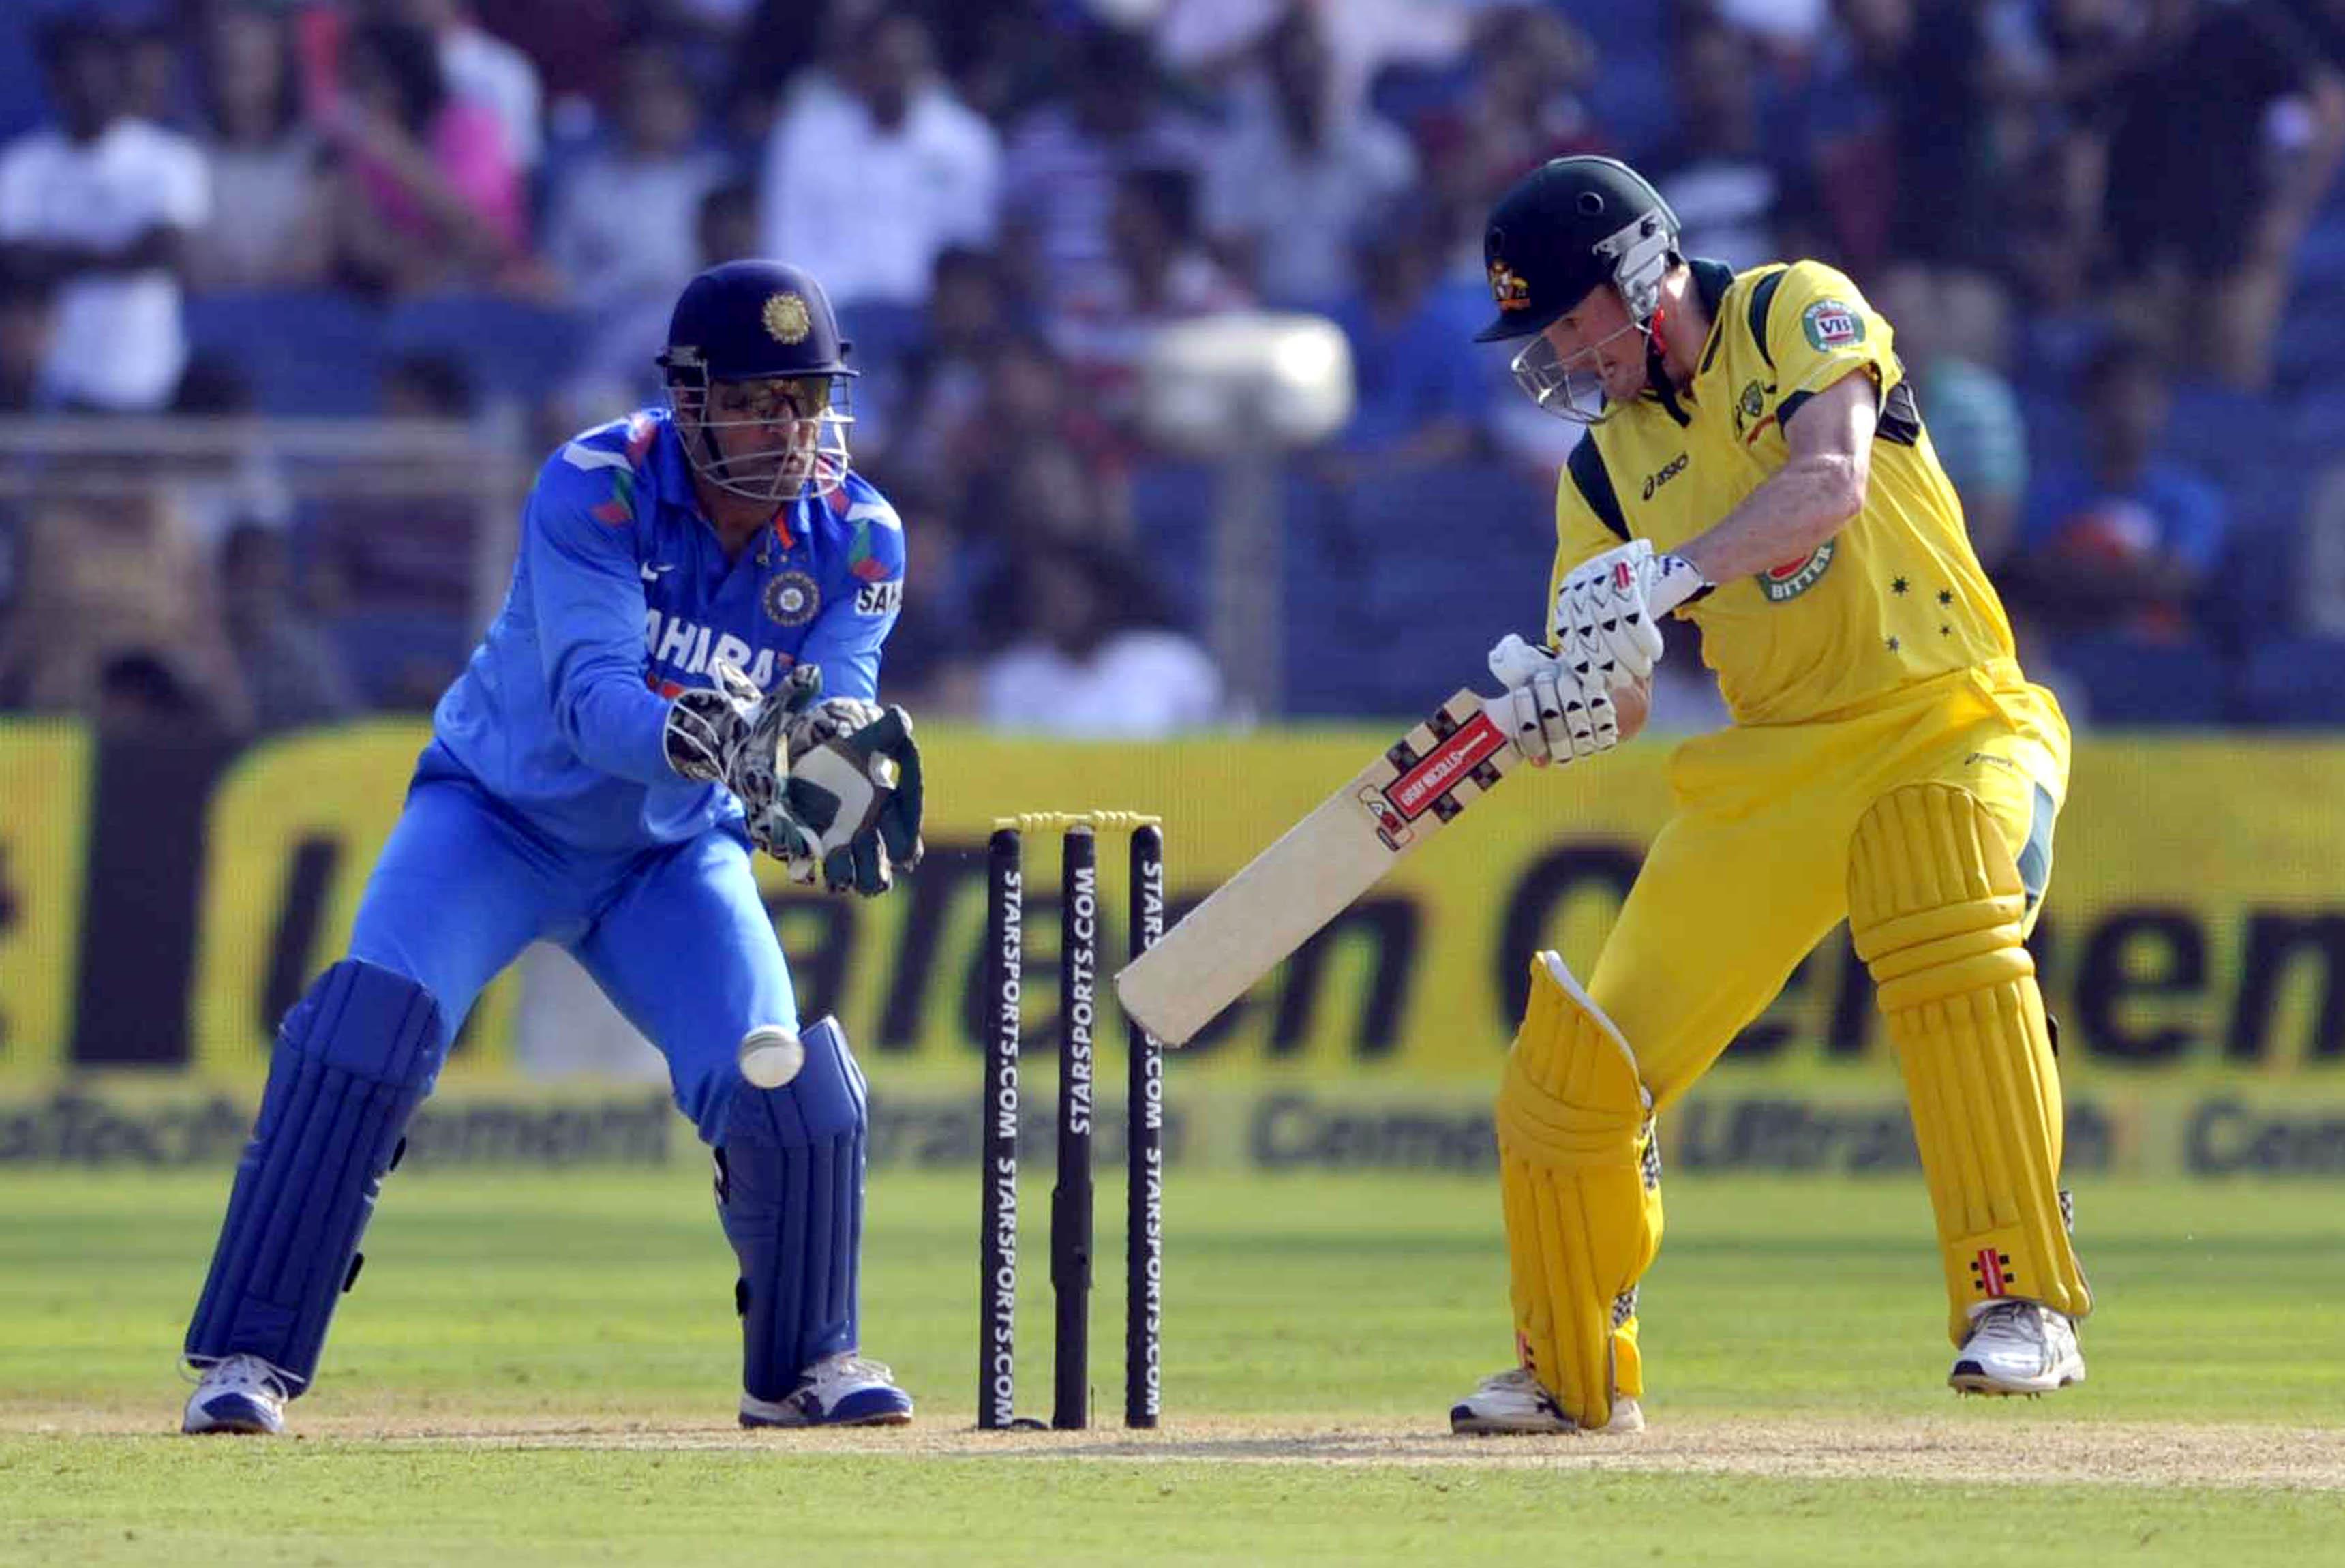 Ind vs Aus 1st ODI : Australia won by 72 runs | Breaking News, World Snap News